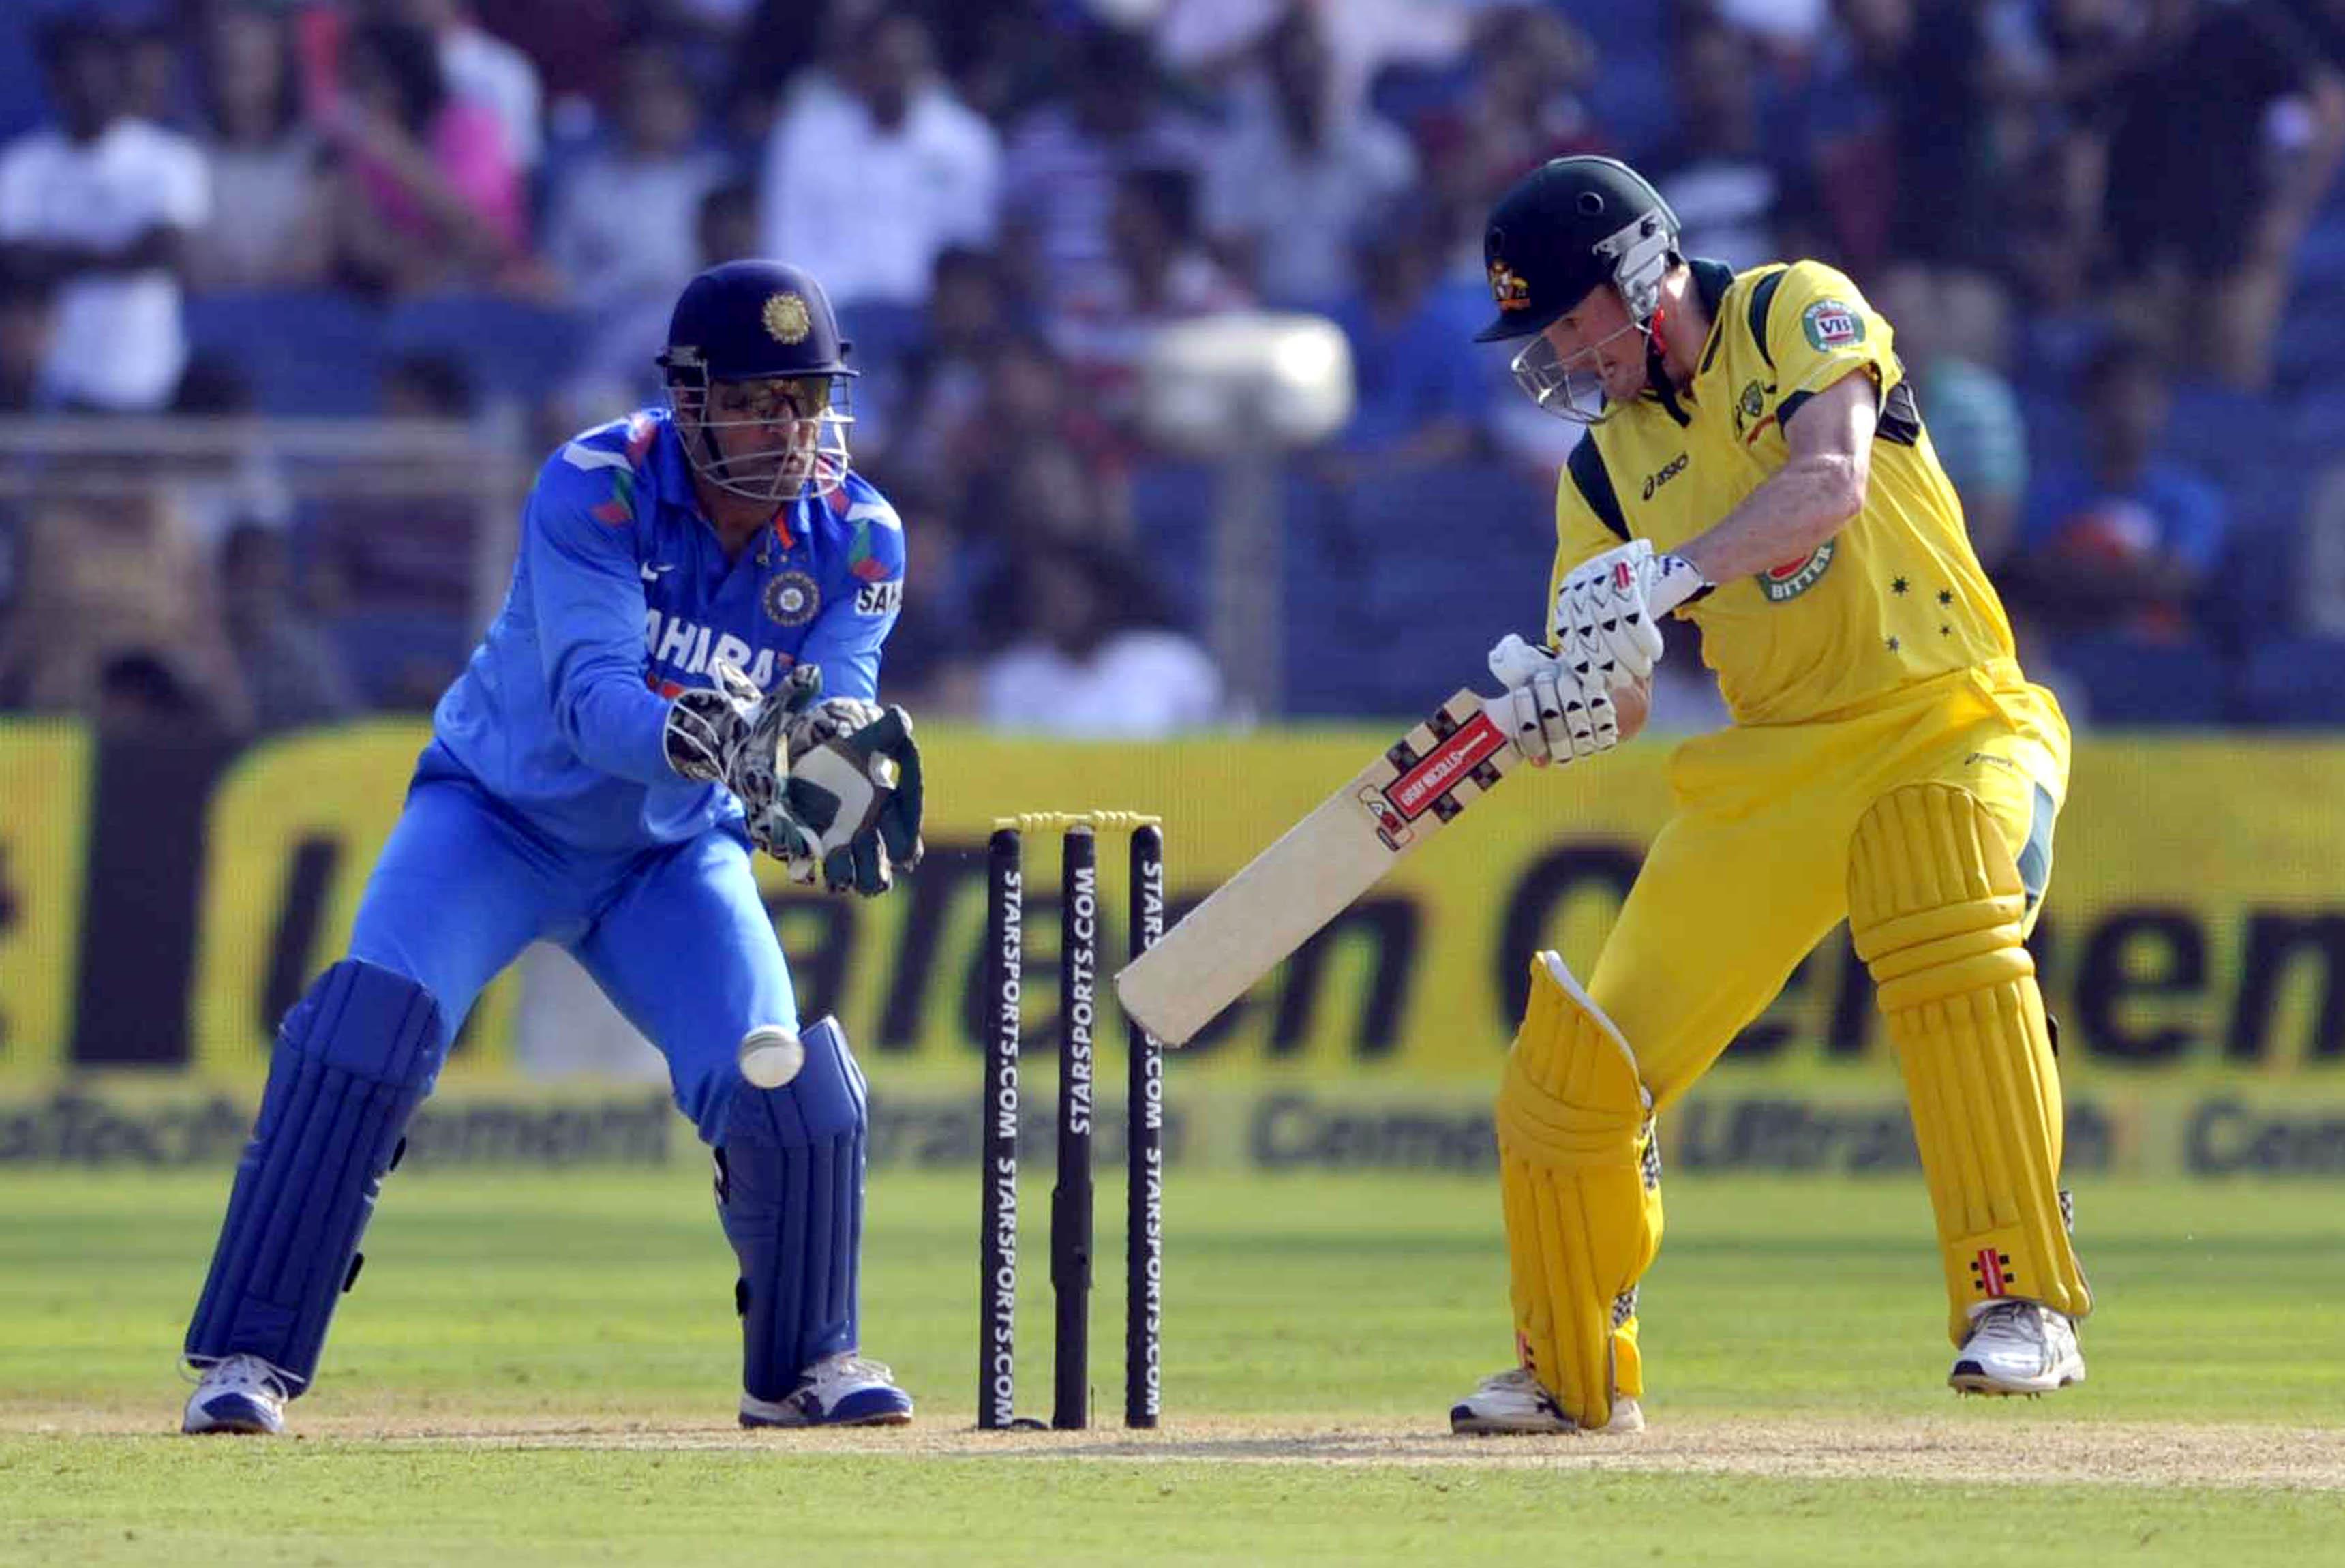 Ind vs Aus 1st ODI : Australia won by 72 runs | Breaking News, World Snap News